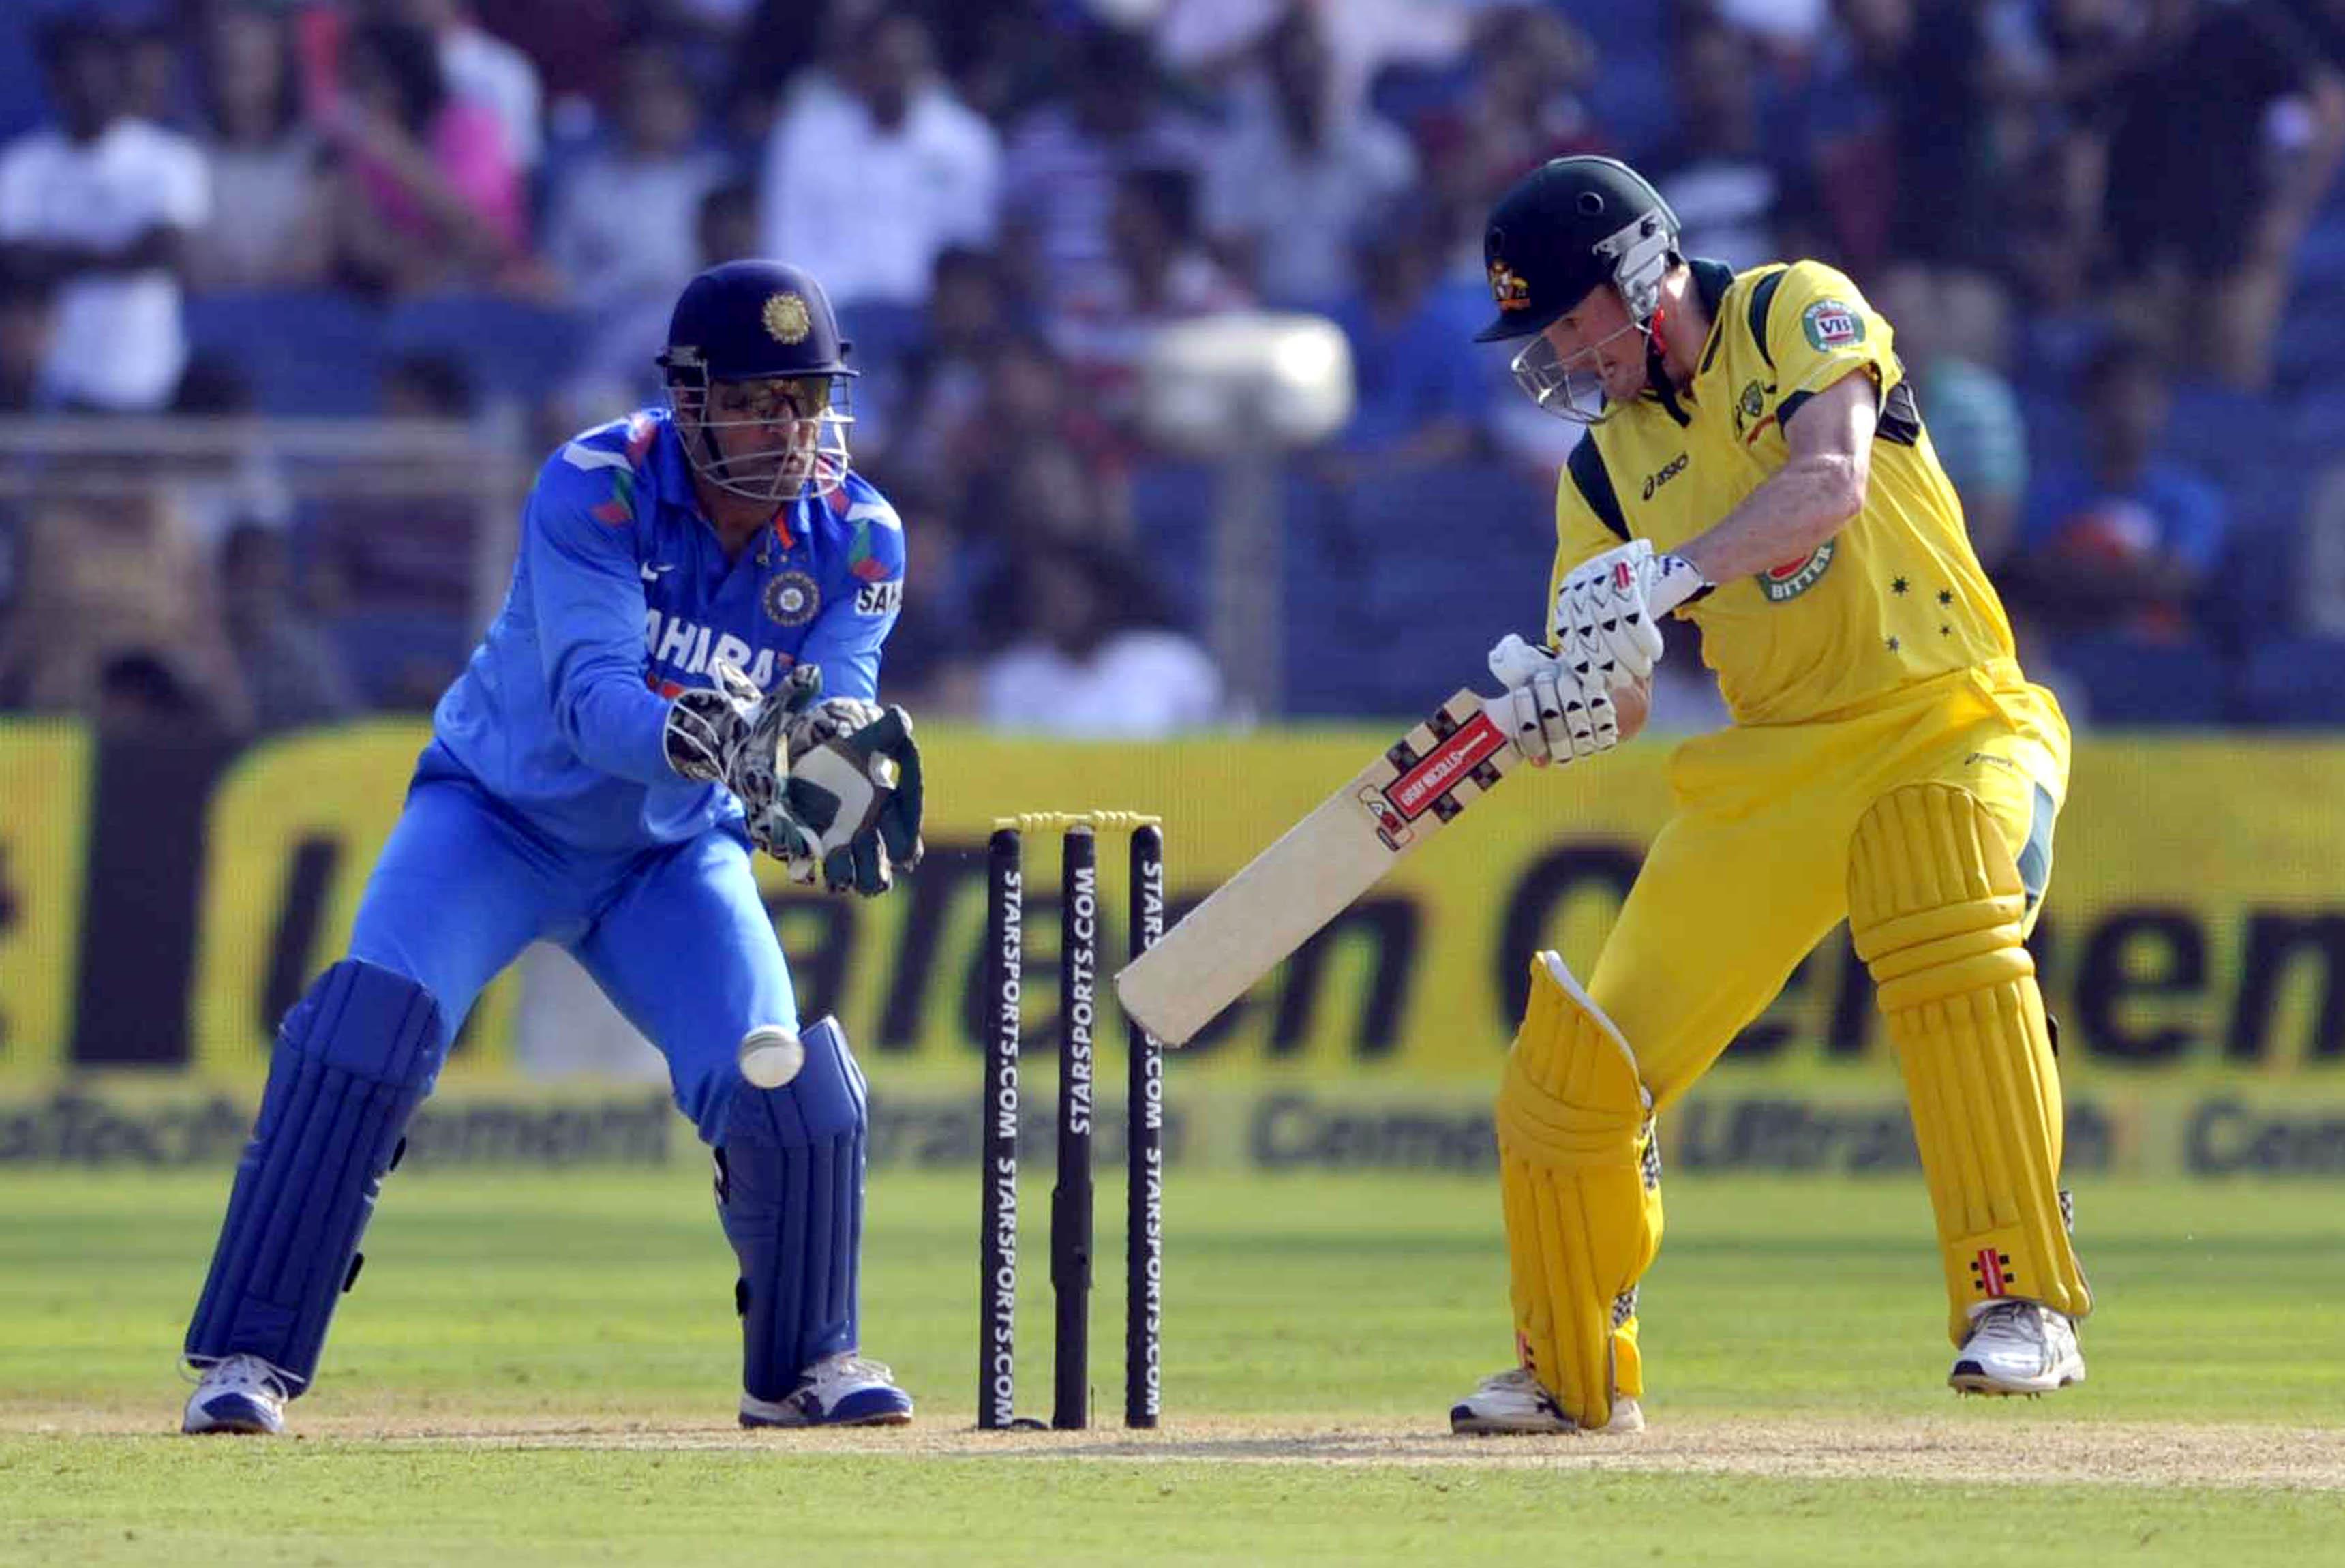 Ind vs Aus 1st ODI : Australia won by 72 runs | Breaking News, World Snap News